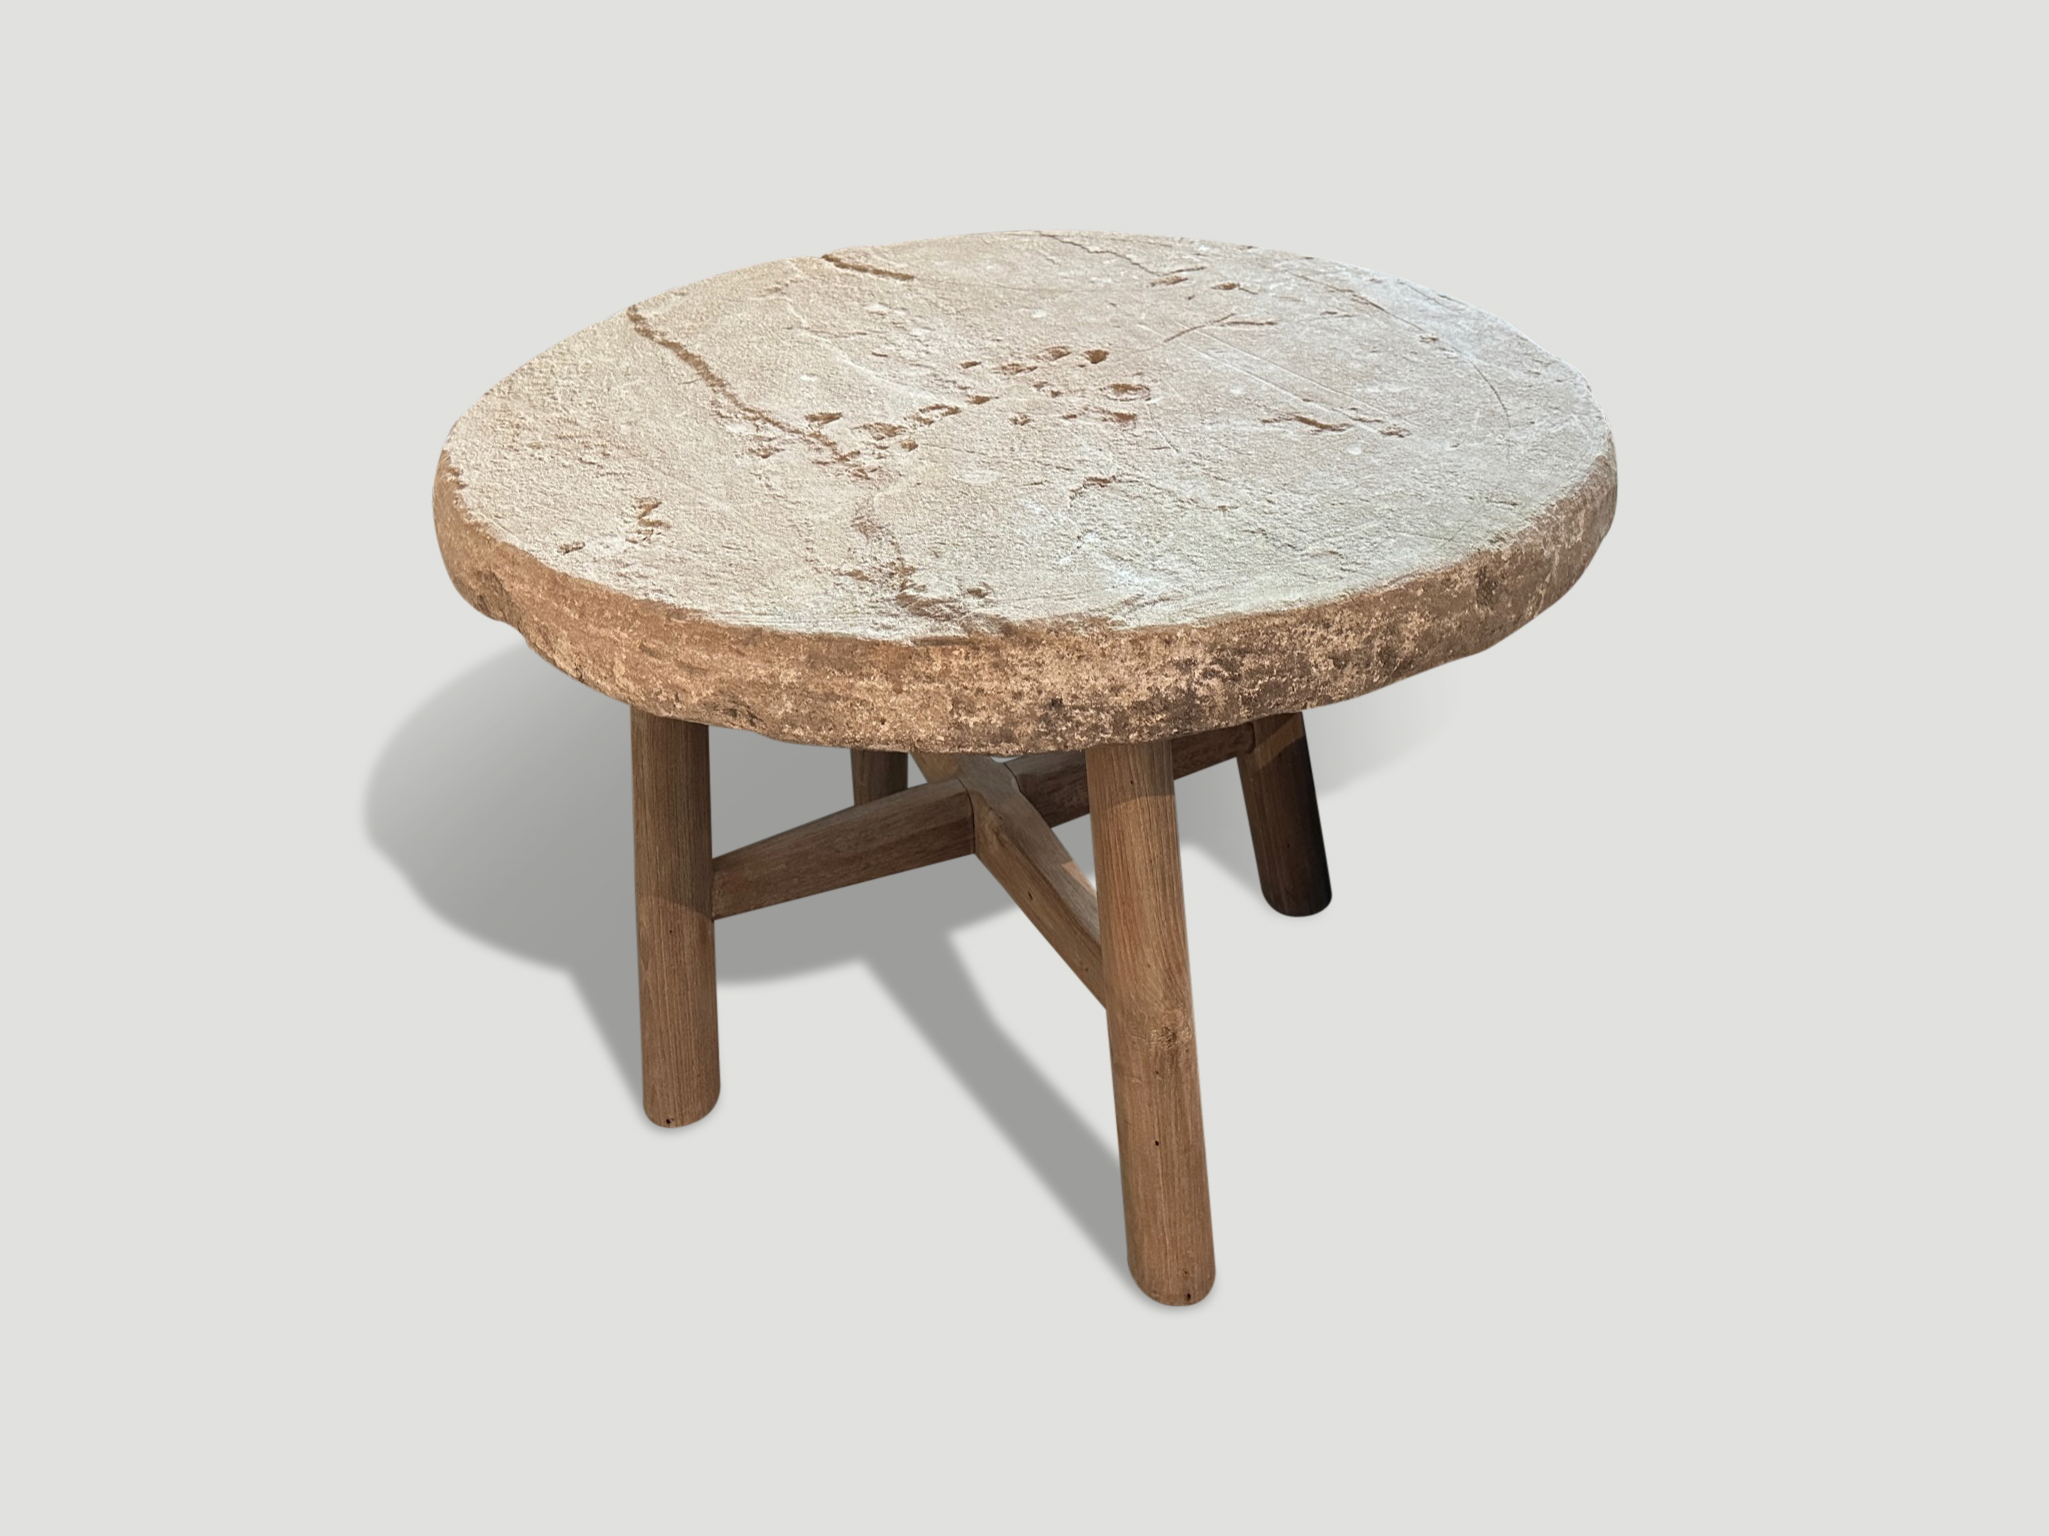 Sumba stone table